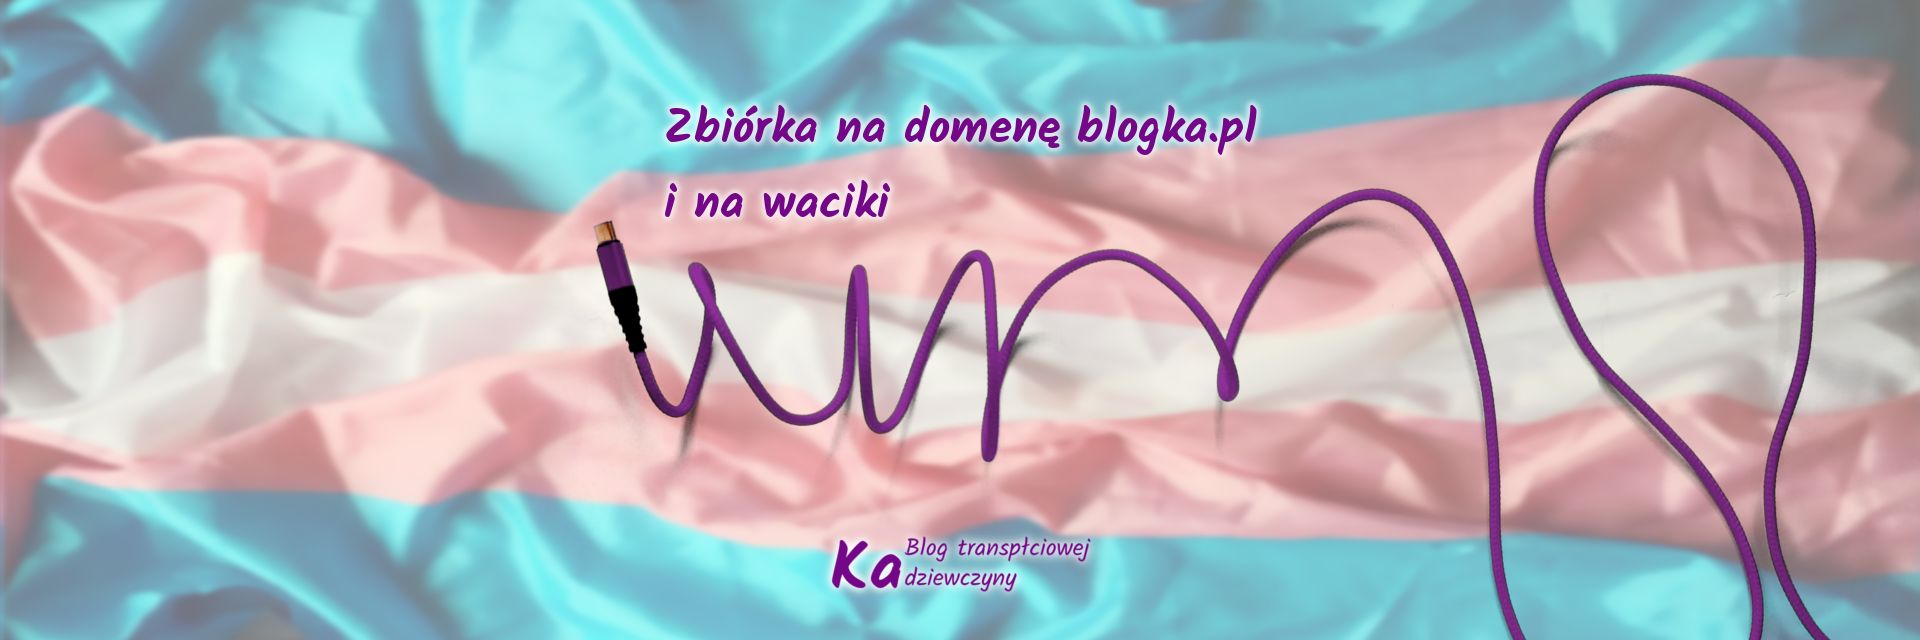 Zbiórka na domenę bloga - blogka.pl i na waciki, [fioletowy spiralnie zwinięty kabel na tle flagi transgender]